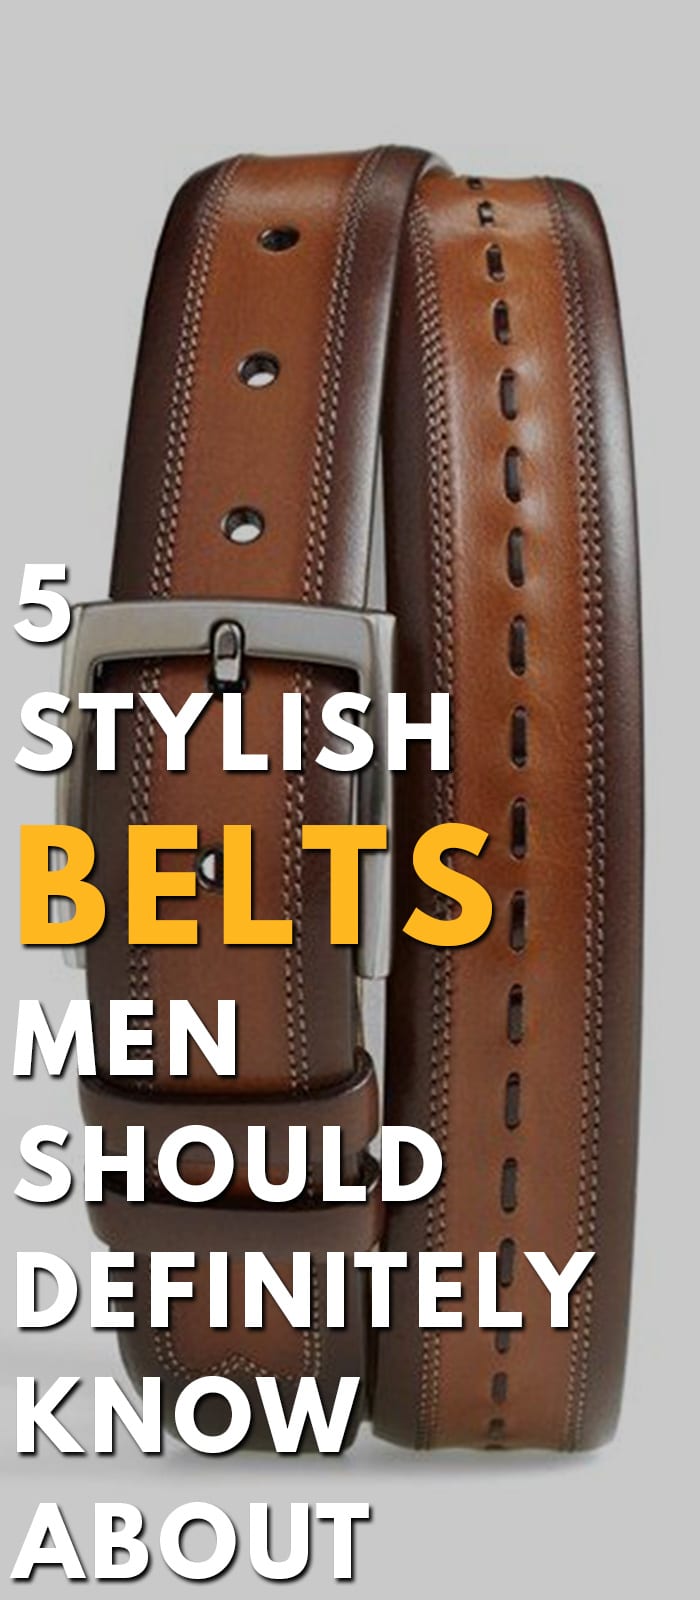 Stylish Belts Men Should Definitely Know About